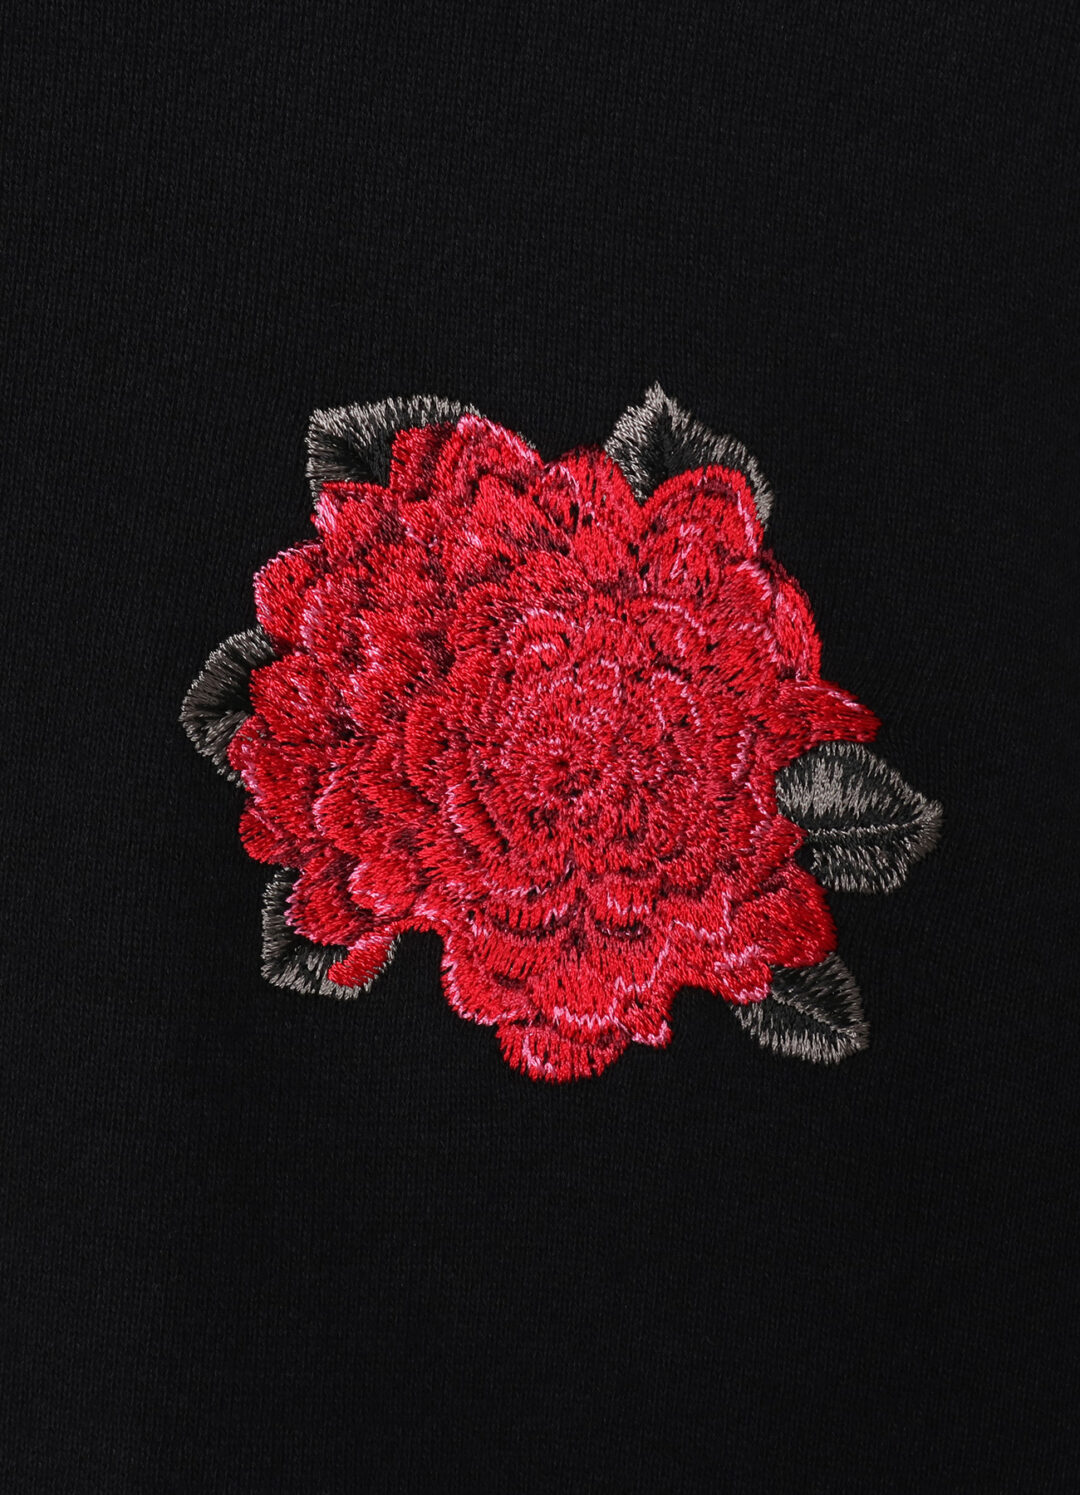 WILDSIDE YOHJI YAMAMOTO オリジナルラインより花の刺繍を施したTシャツ・フーディーが12/6 発売 (ヨウジヤマモト)